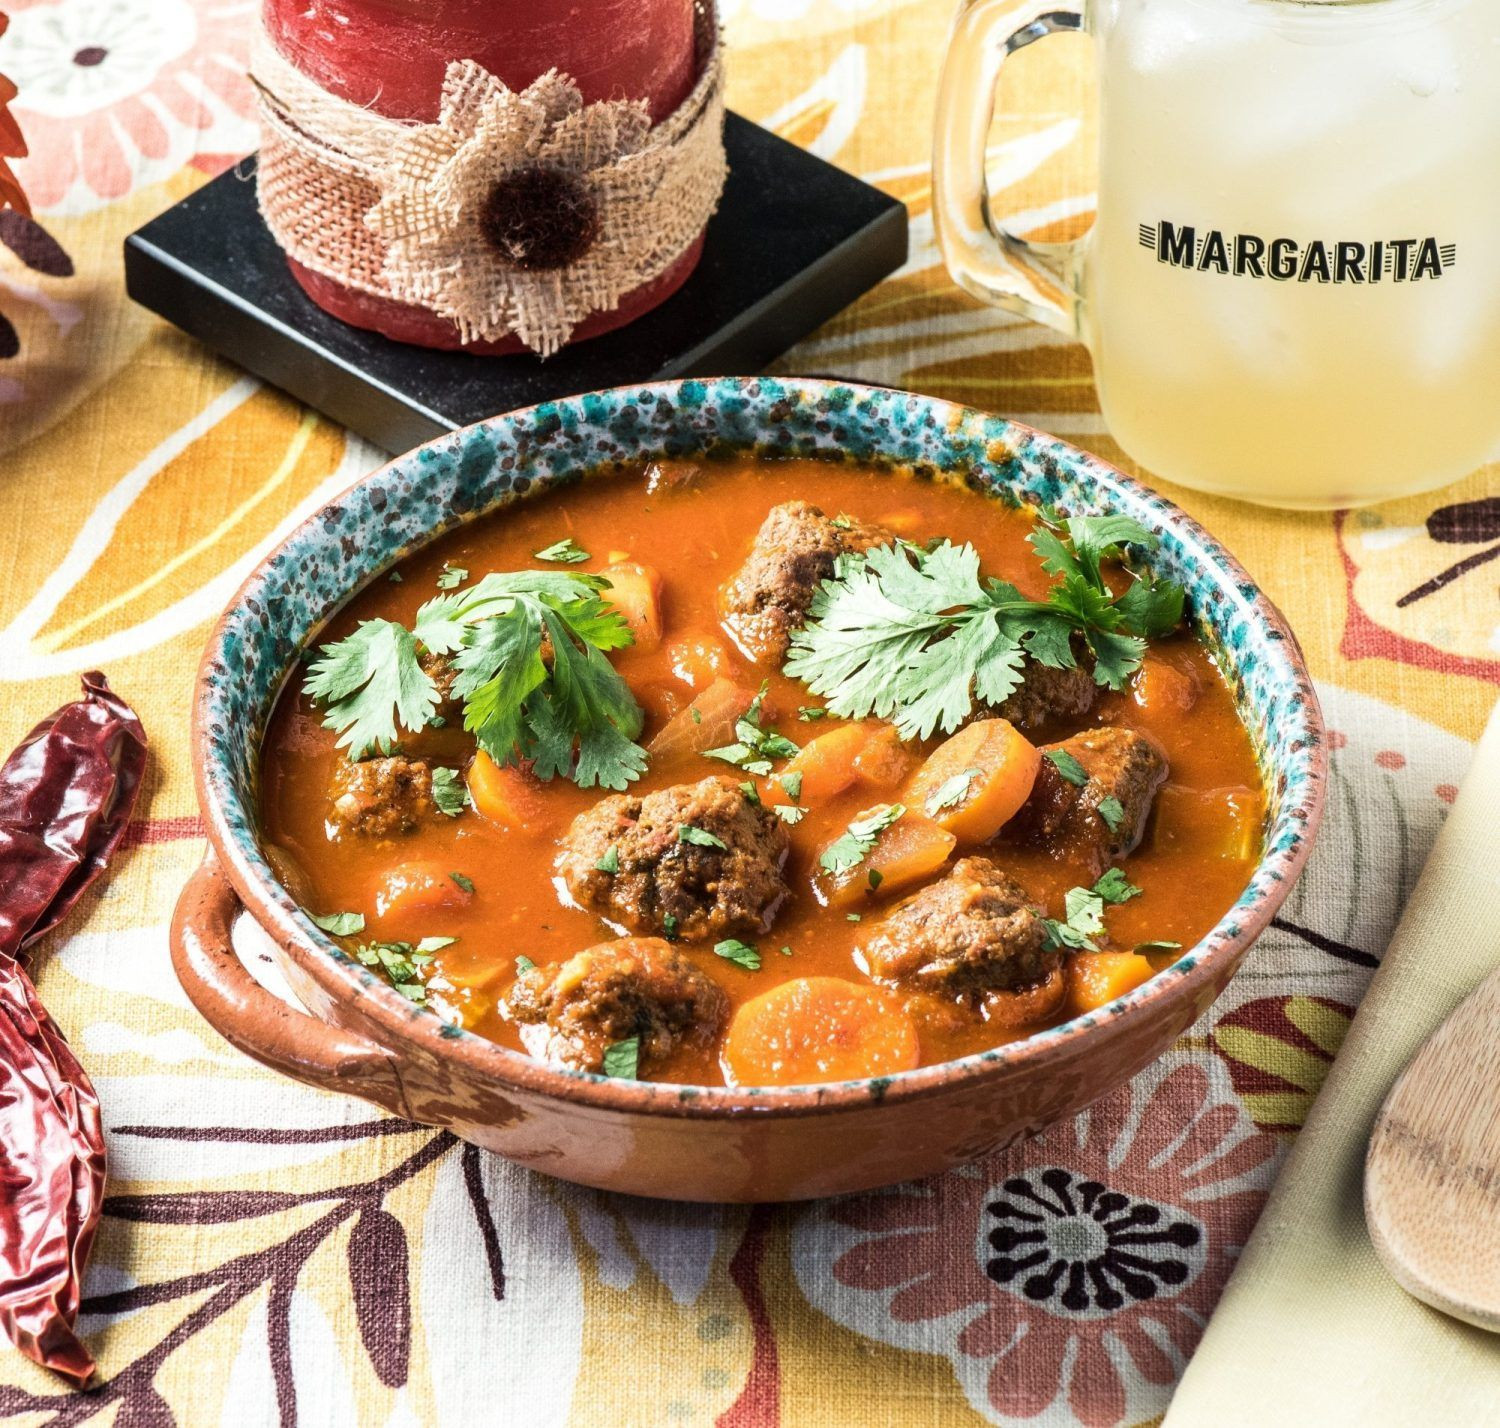 Albondigas Soup Recipe Mexican Keto
 Keto Albóndigas Meatball Soup Recipe